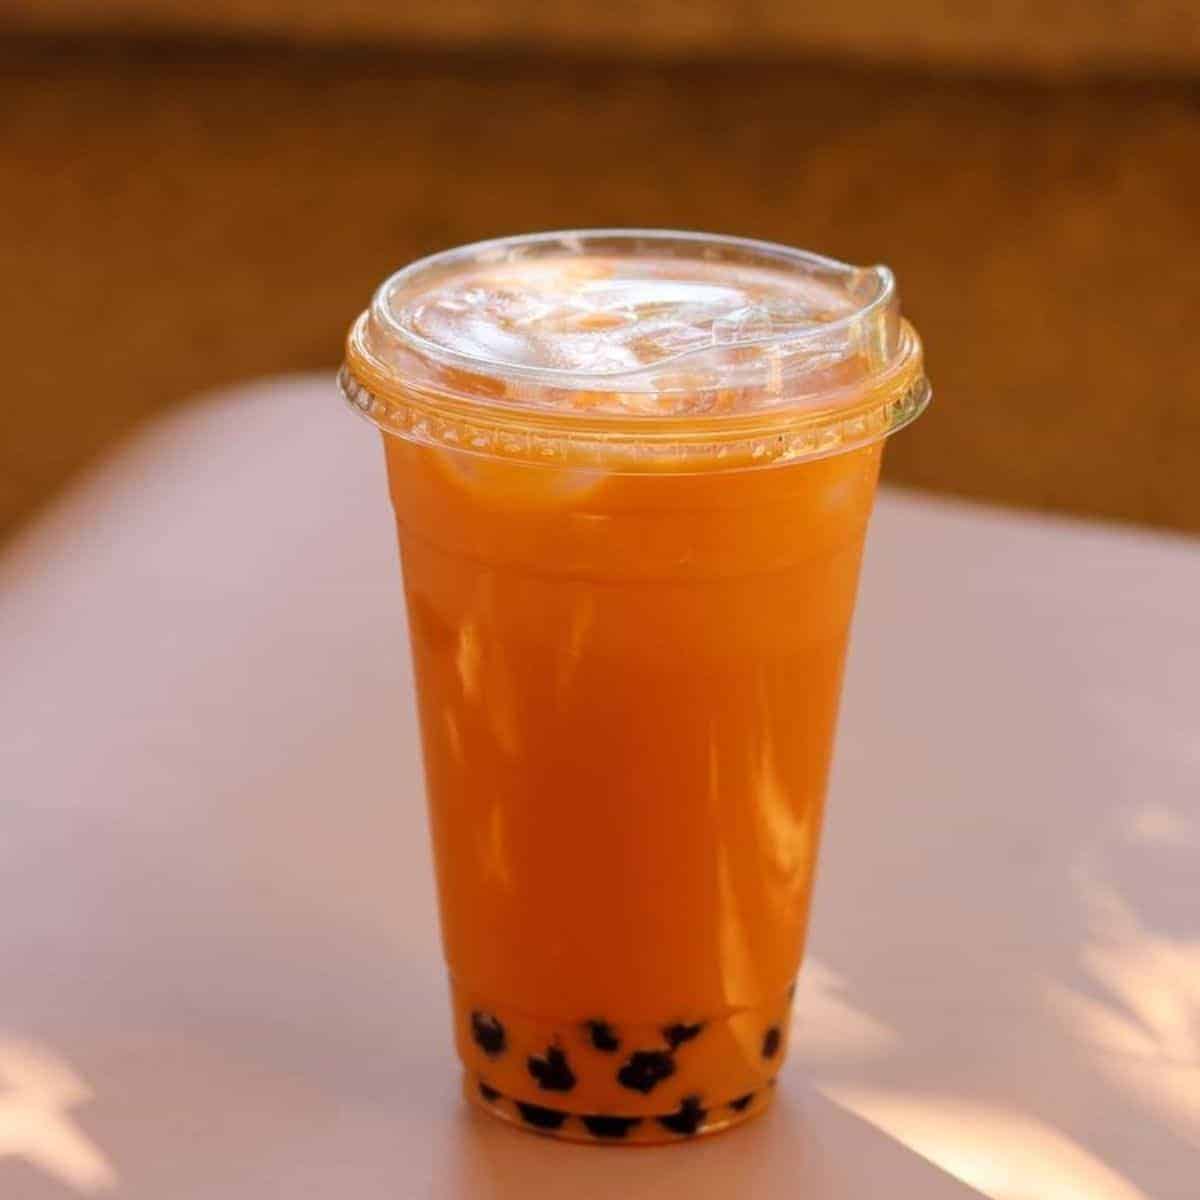 Bubble tea drink in plastic cup